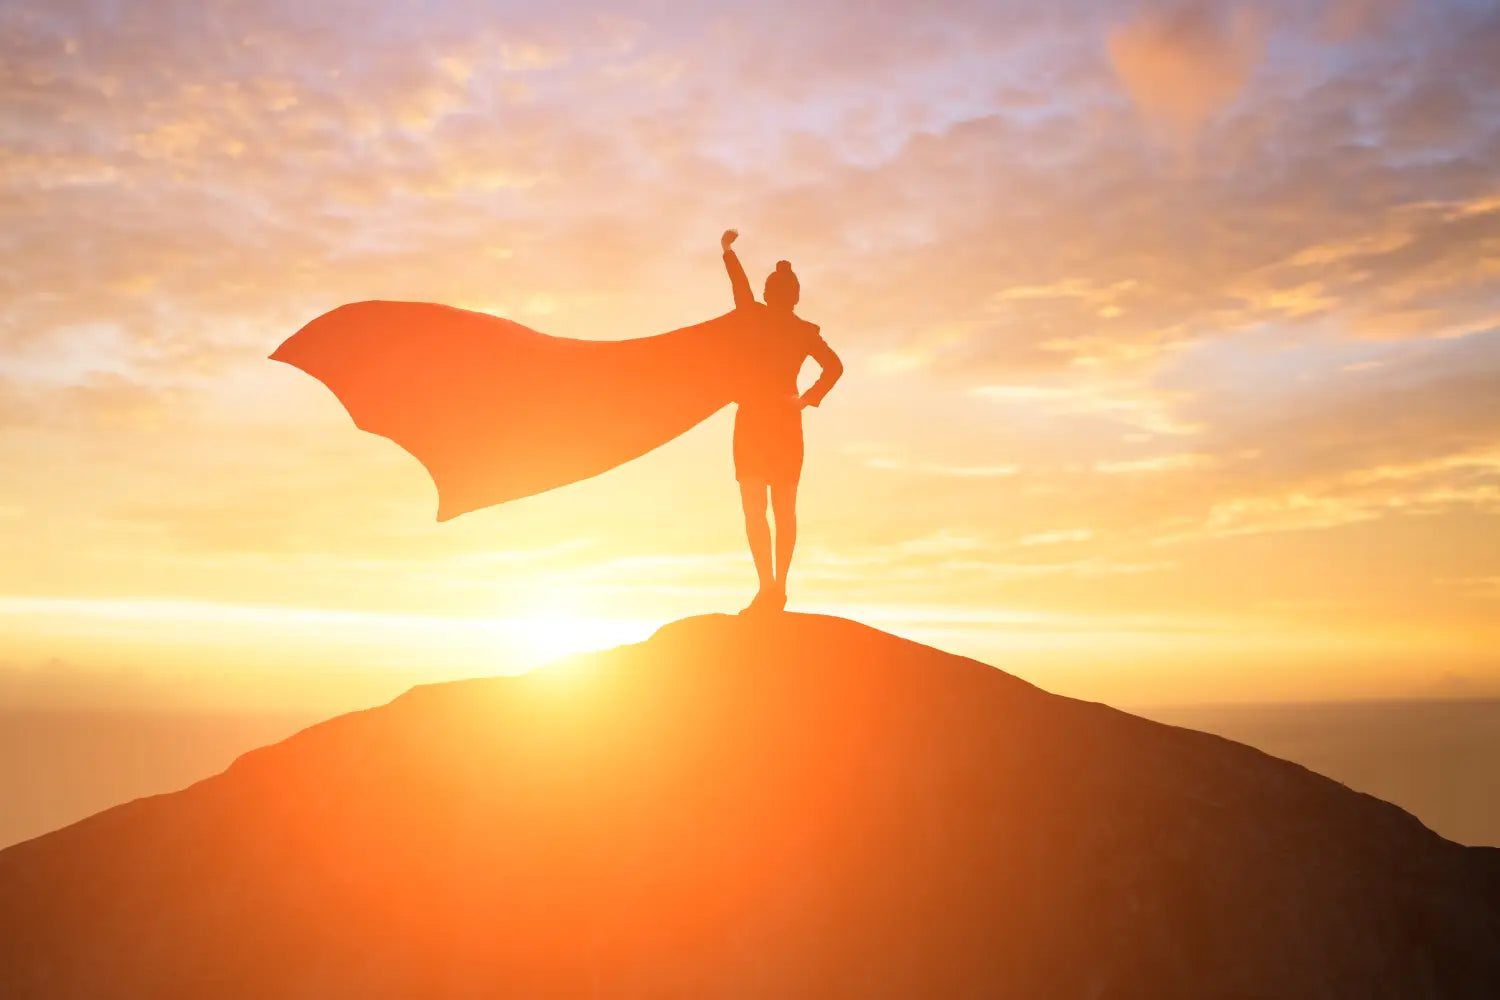 Be your own hero: three behaviors we see in heros